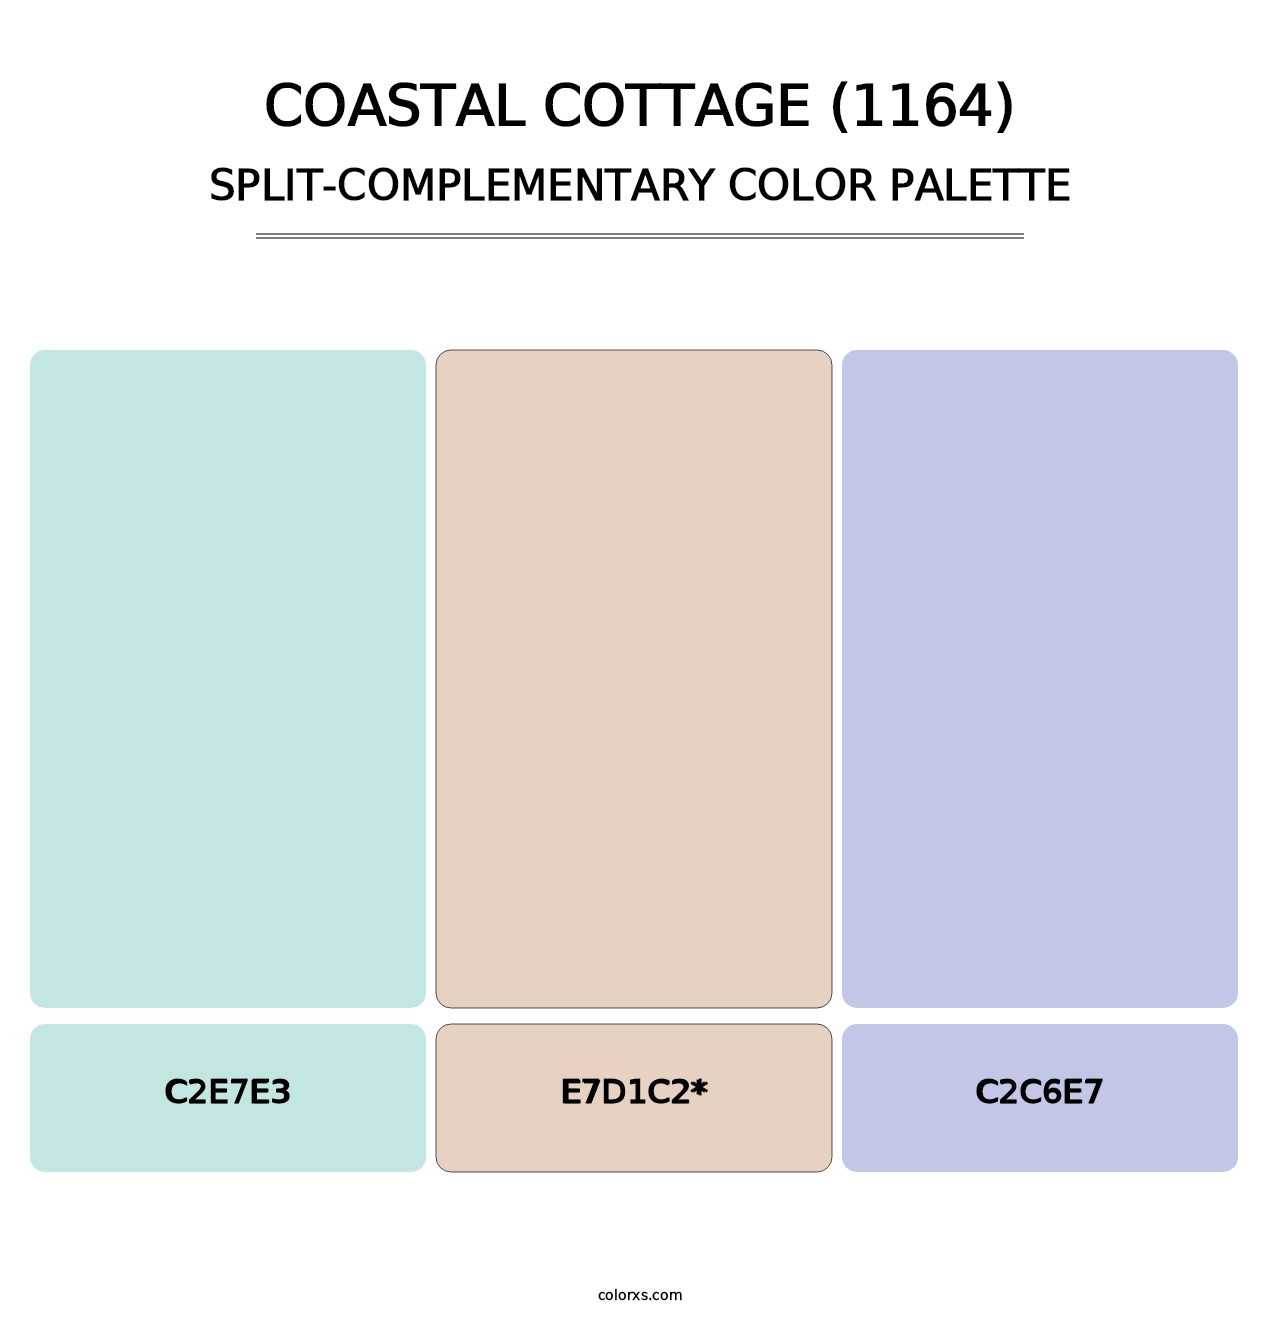 Coastal Cottage (1164) - Split-Complementary Color Palette